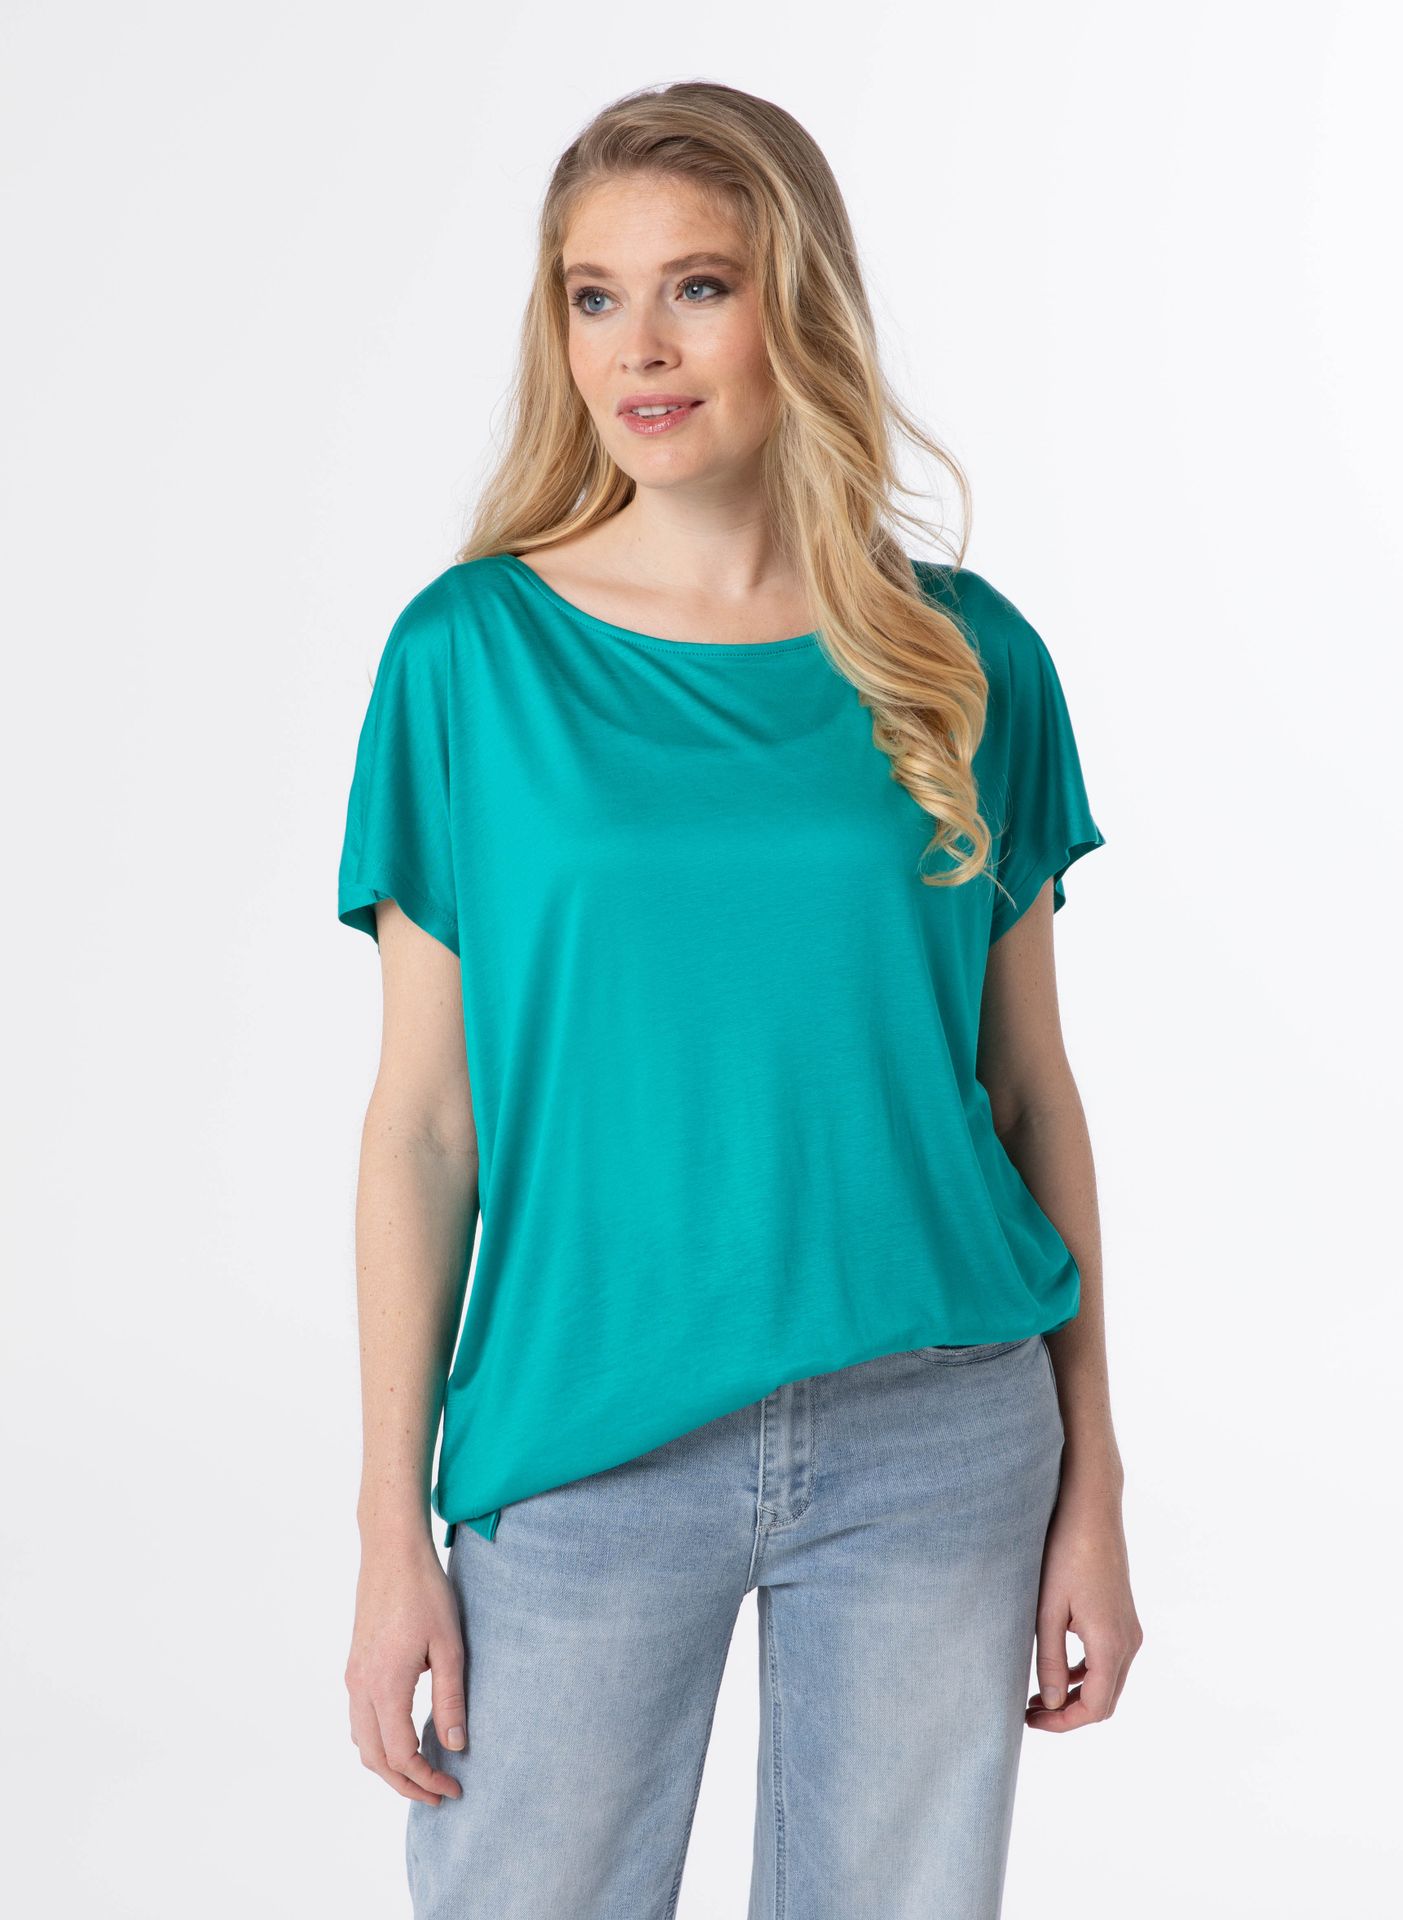 Norah Shirt blauw jade 209618-574